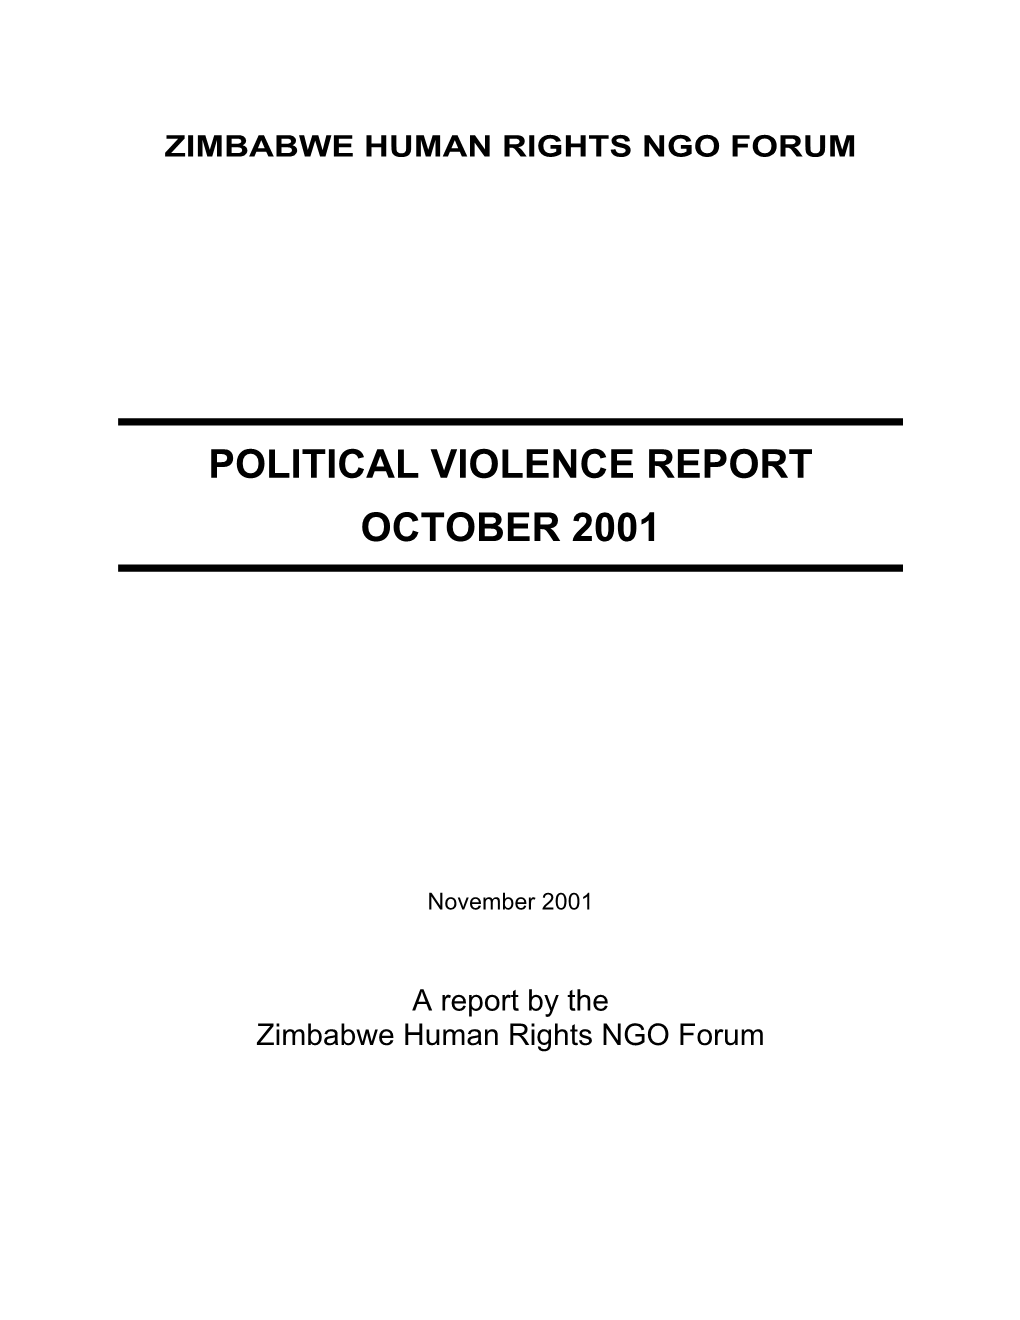 Political Violence Report October 2001